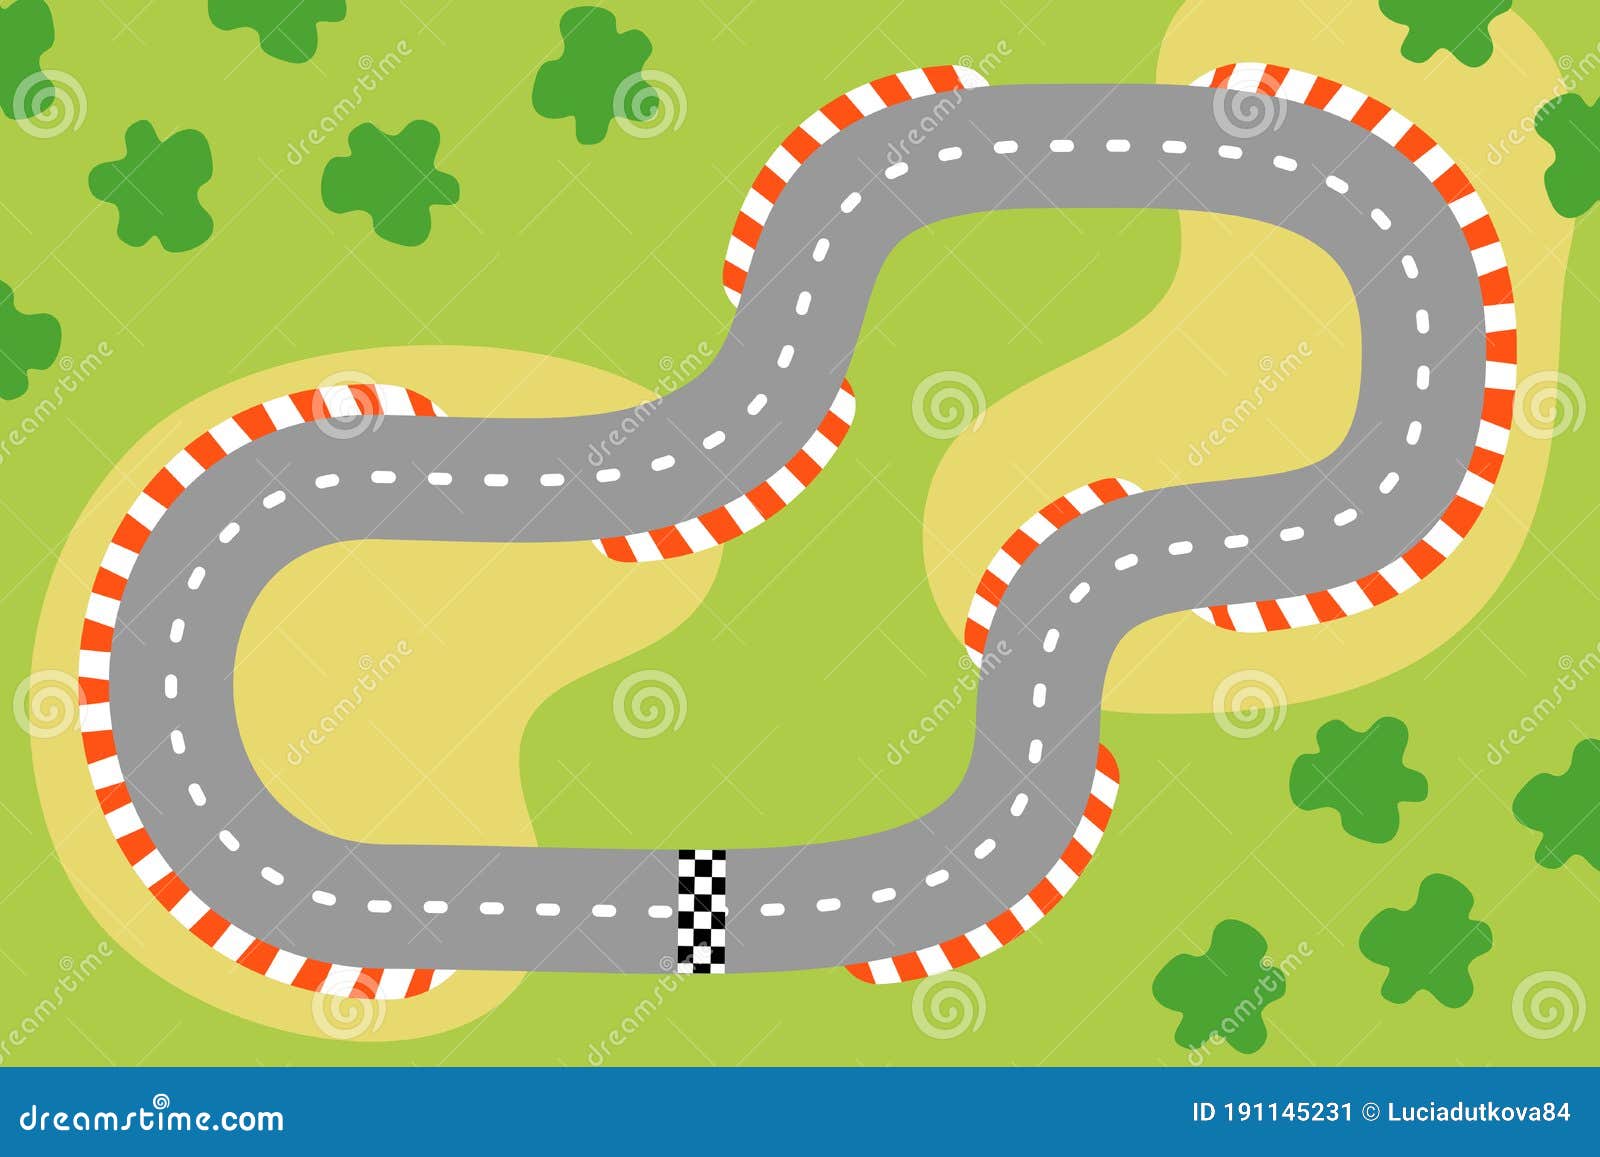 F1 Race Car Vector Illustration | CartoonDealer.com #11540344